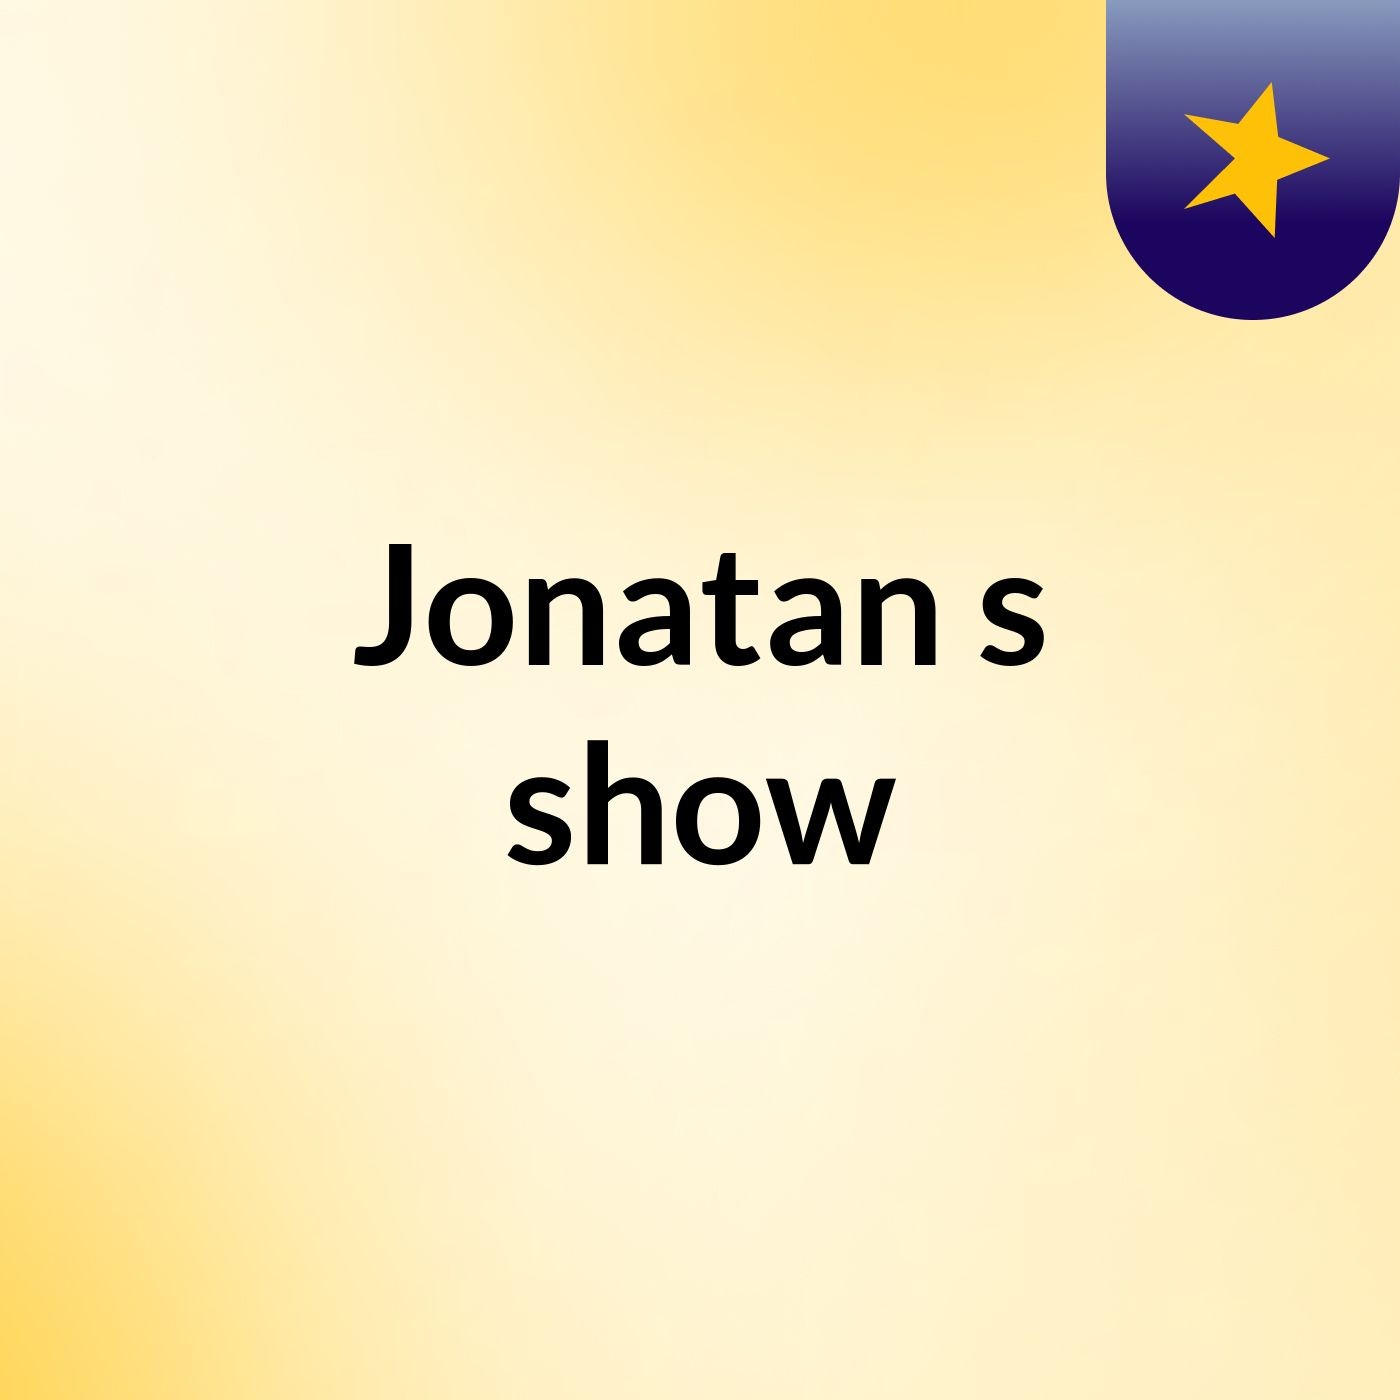 Jonatan's show